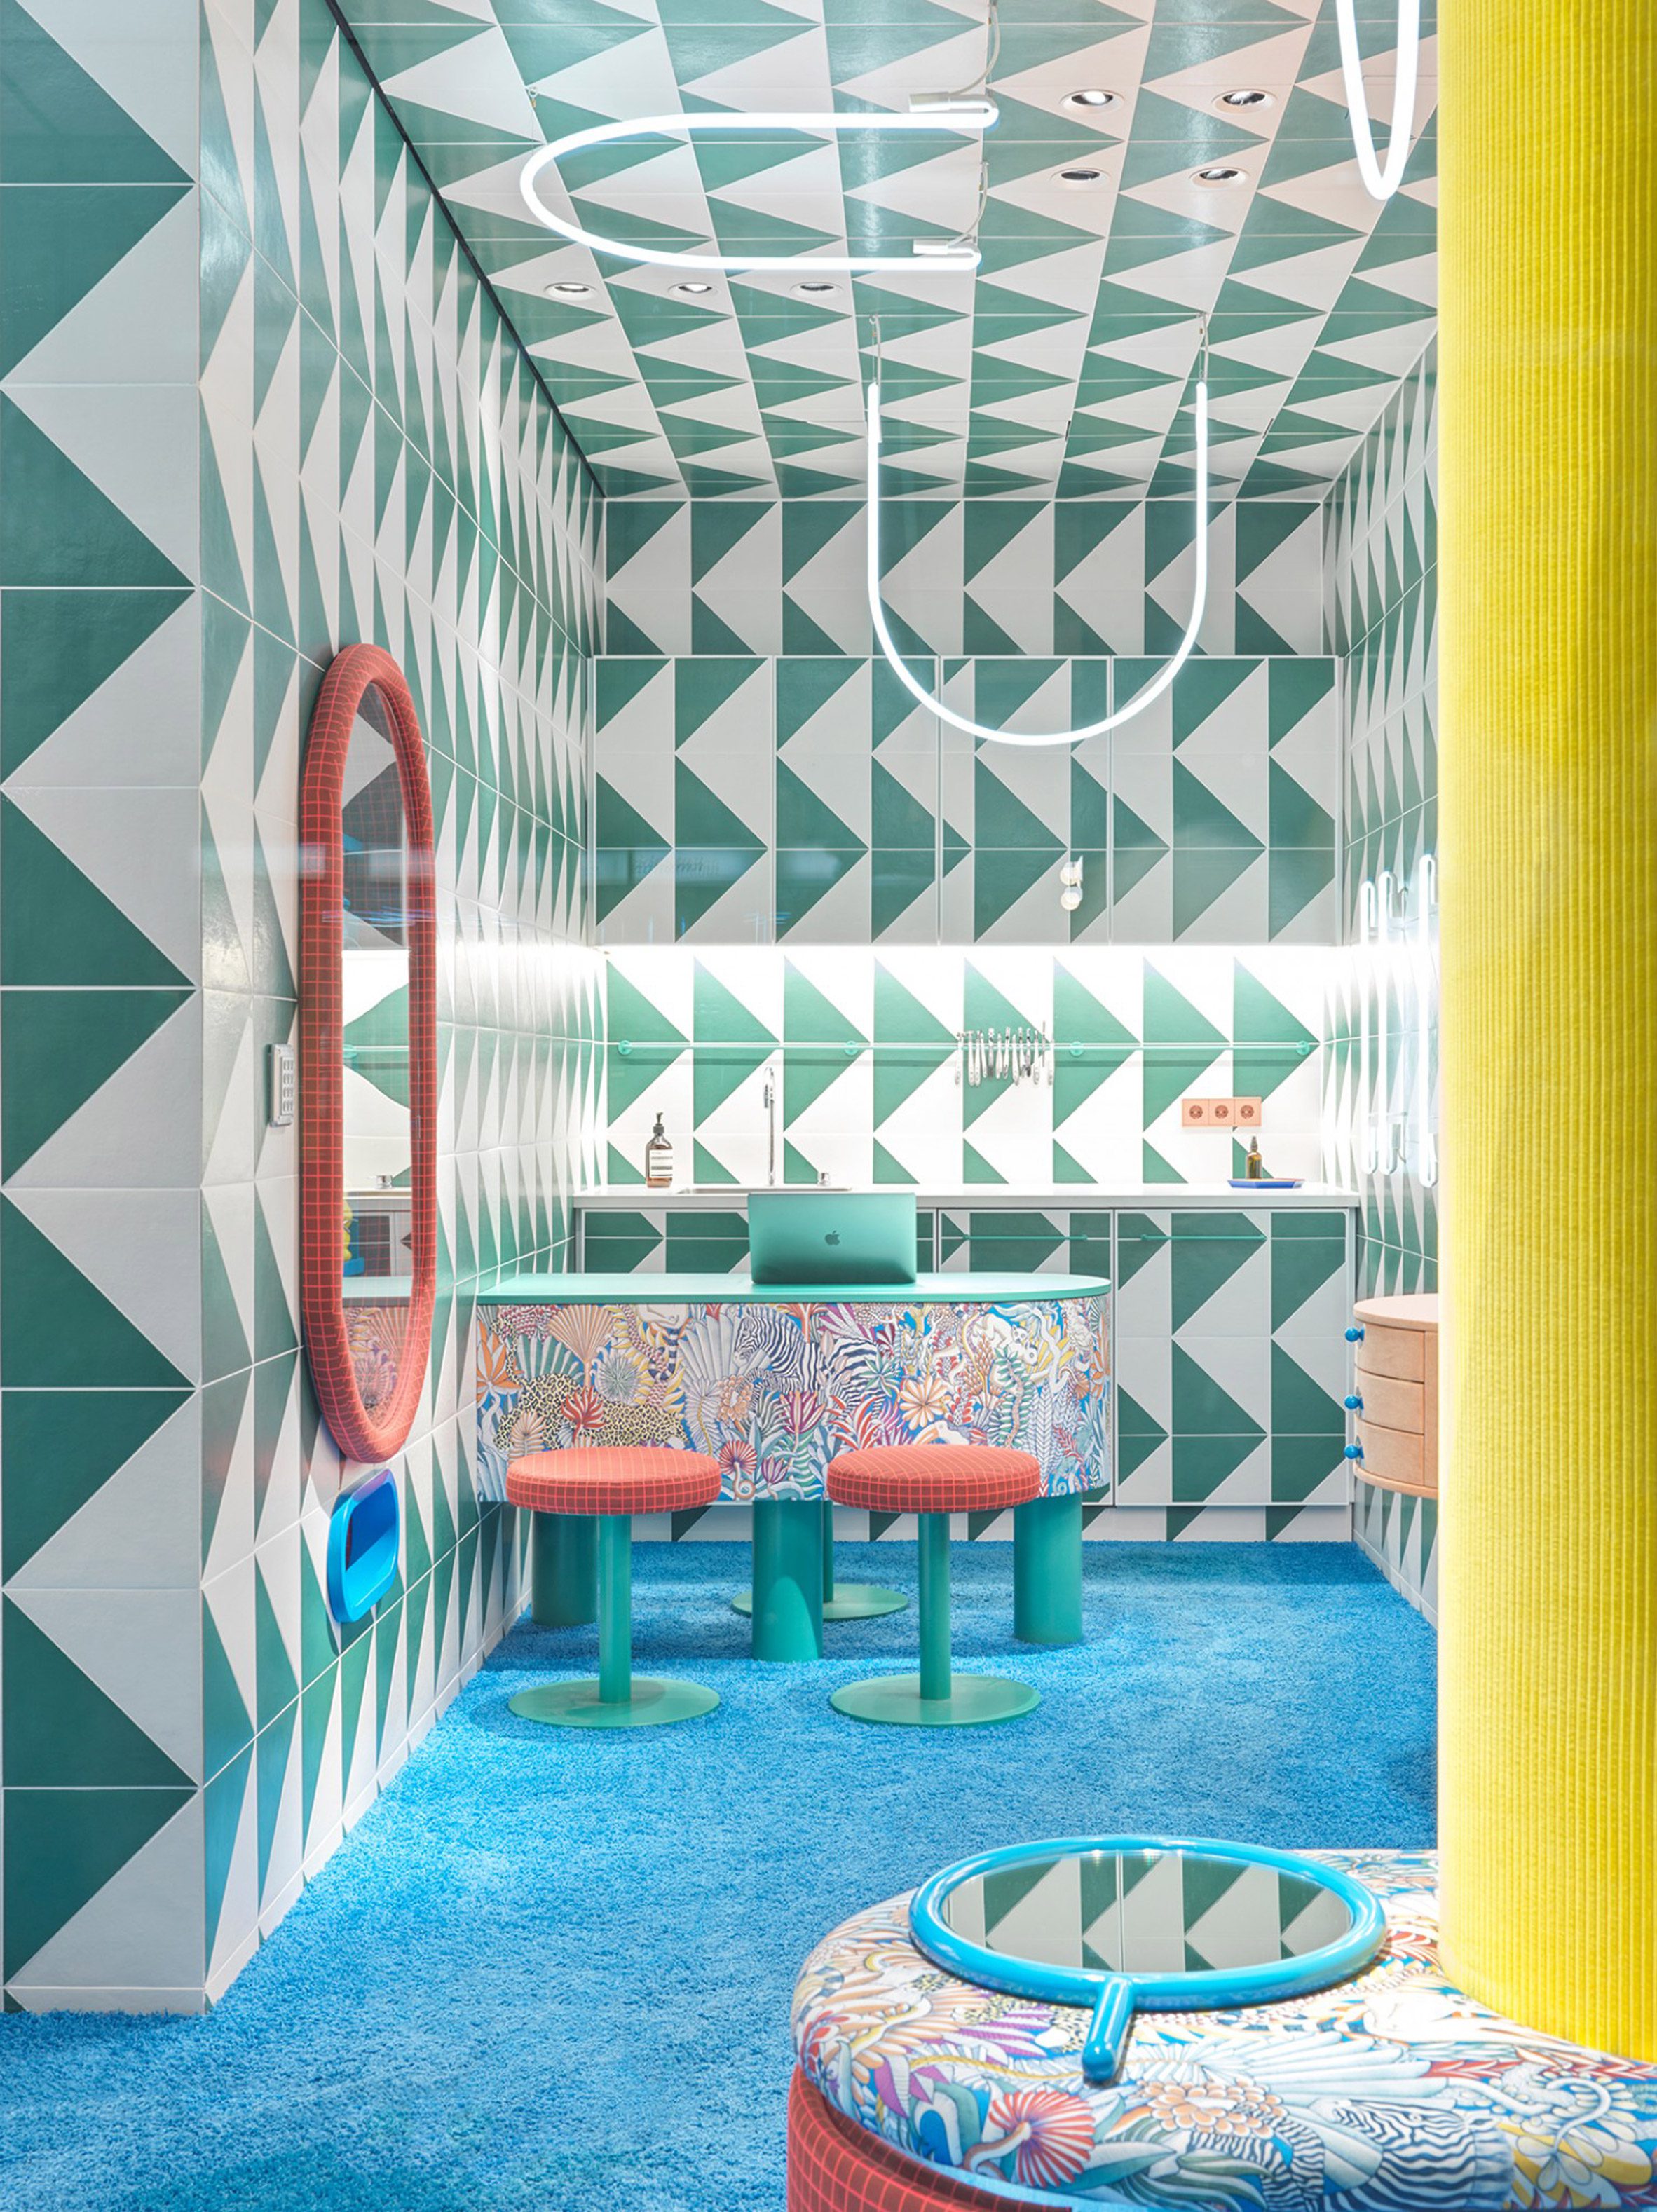 Furnitur berwarna kontras ditempatkan di seluruh toko kacamata Leidmann oleh Stephanie Thatenhorst 